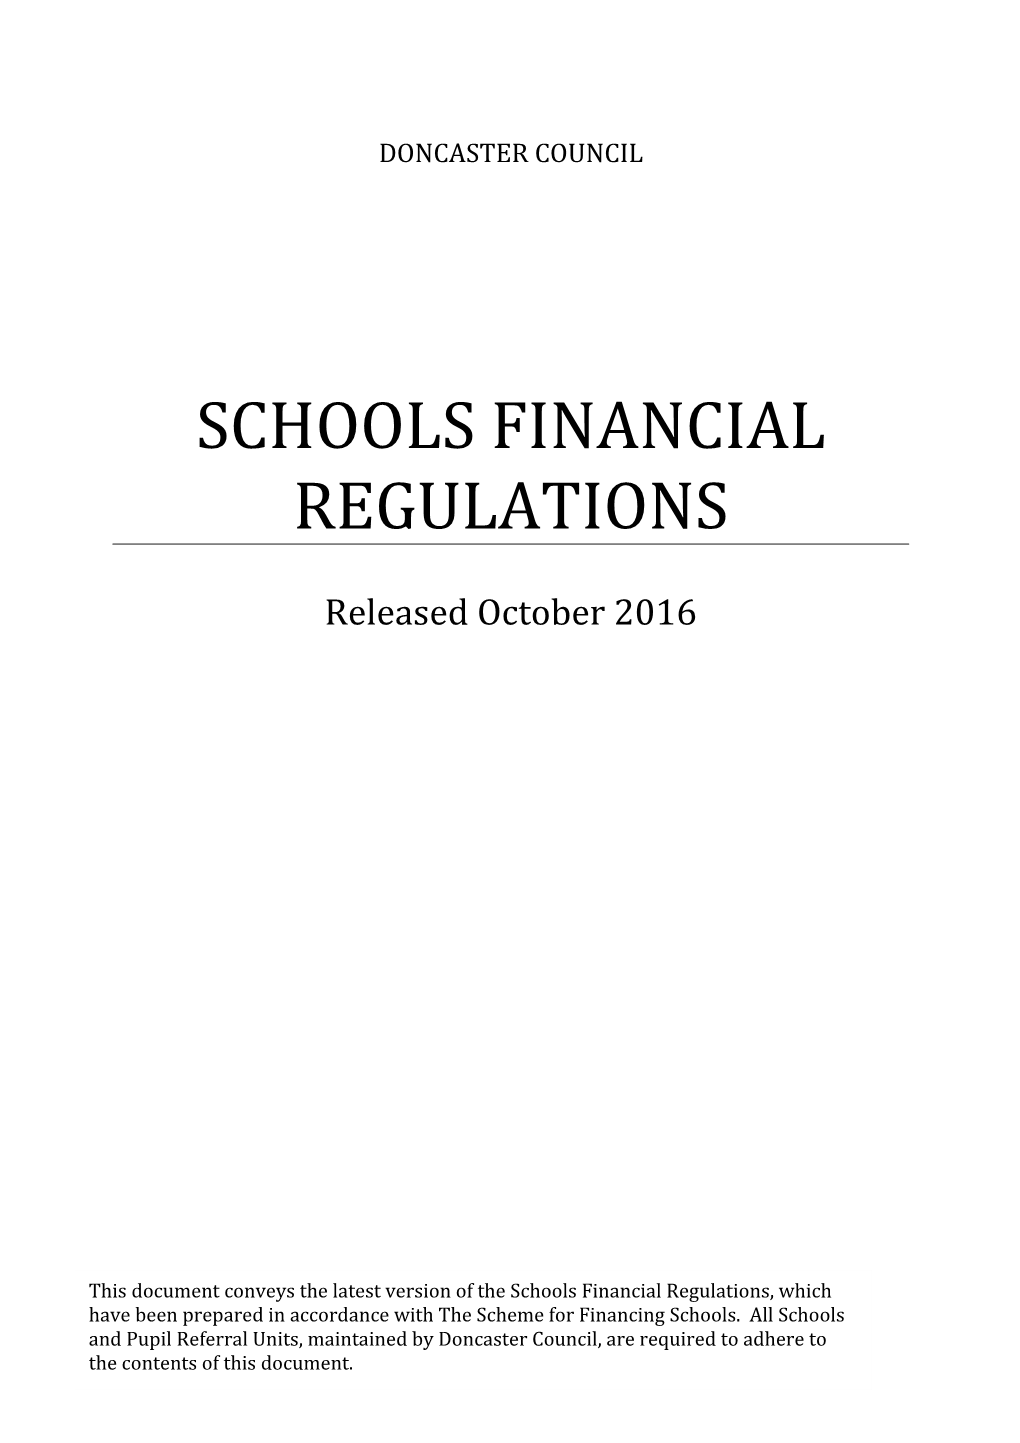 Schools Financial Regulations